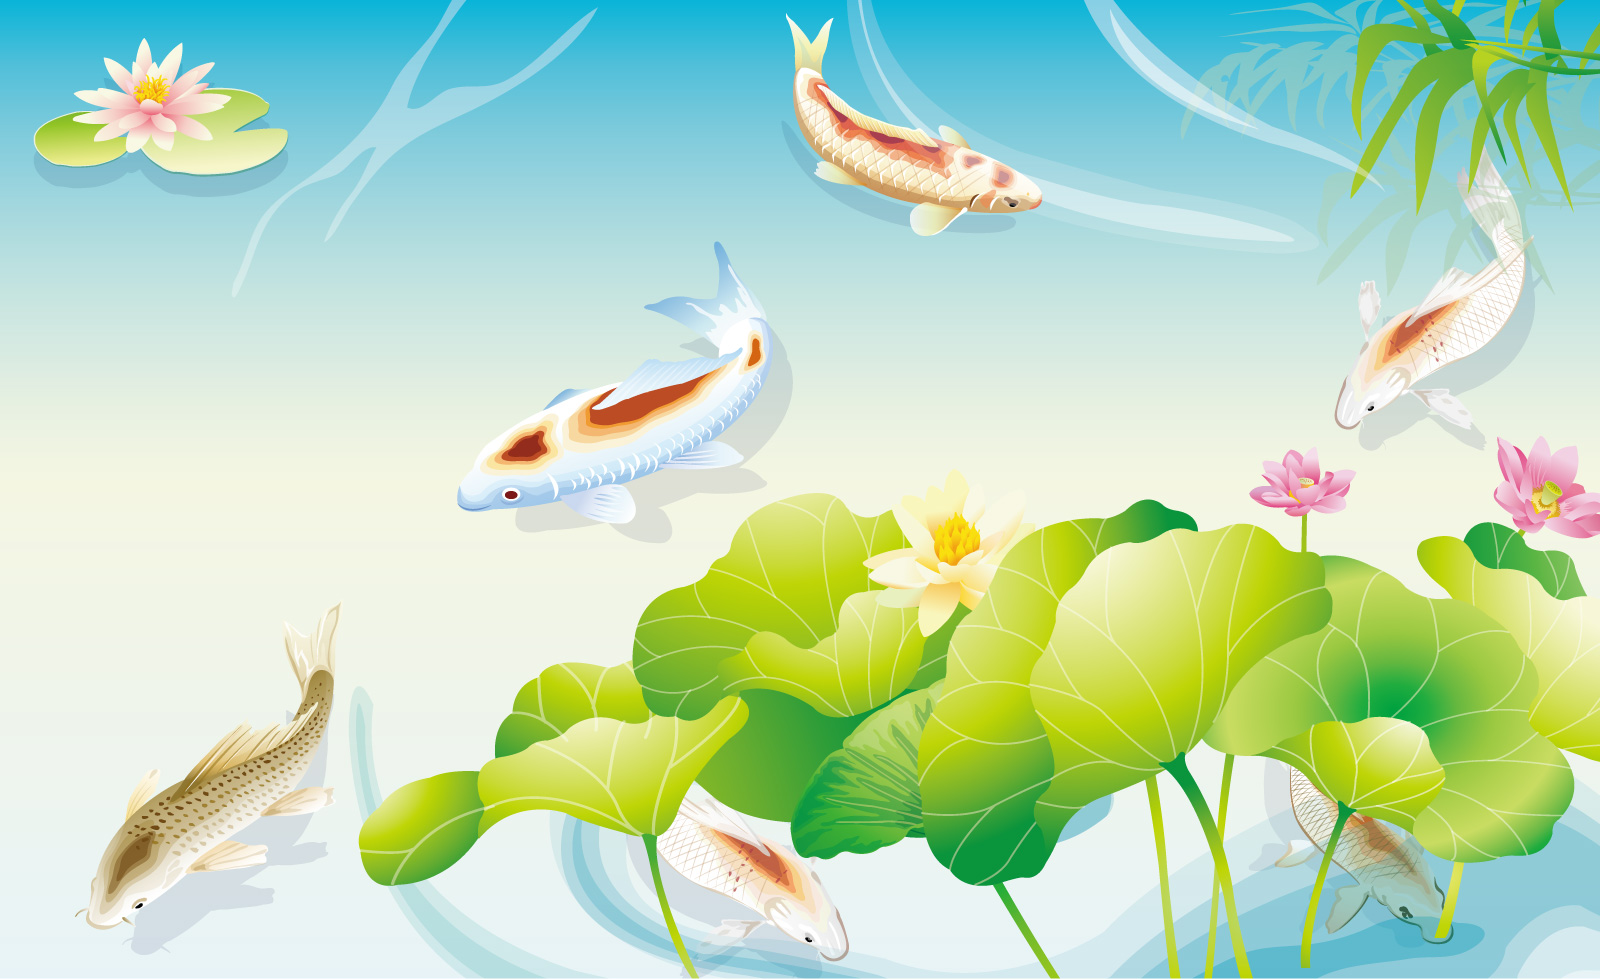 Chinese traditional pond carp lotus image vector material - China Illustrations Vectors AI ESP